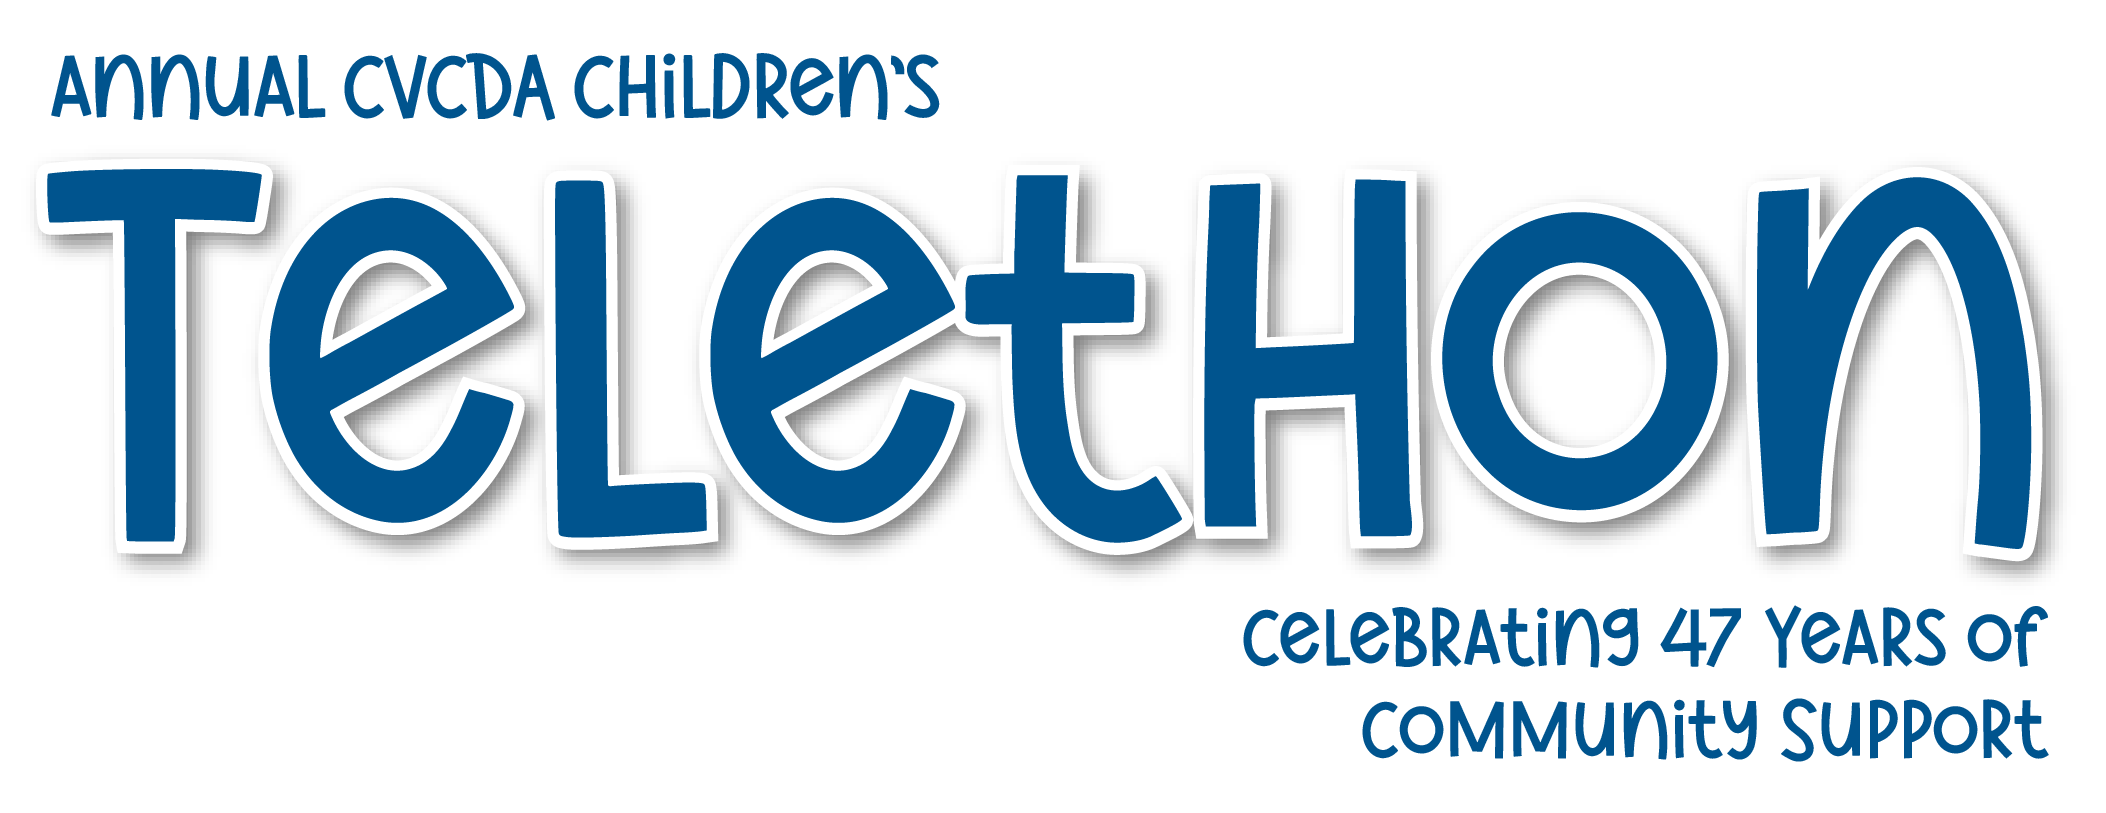 47th CVCDA Children's Telethon logo